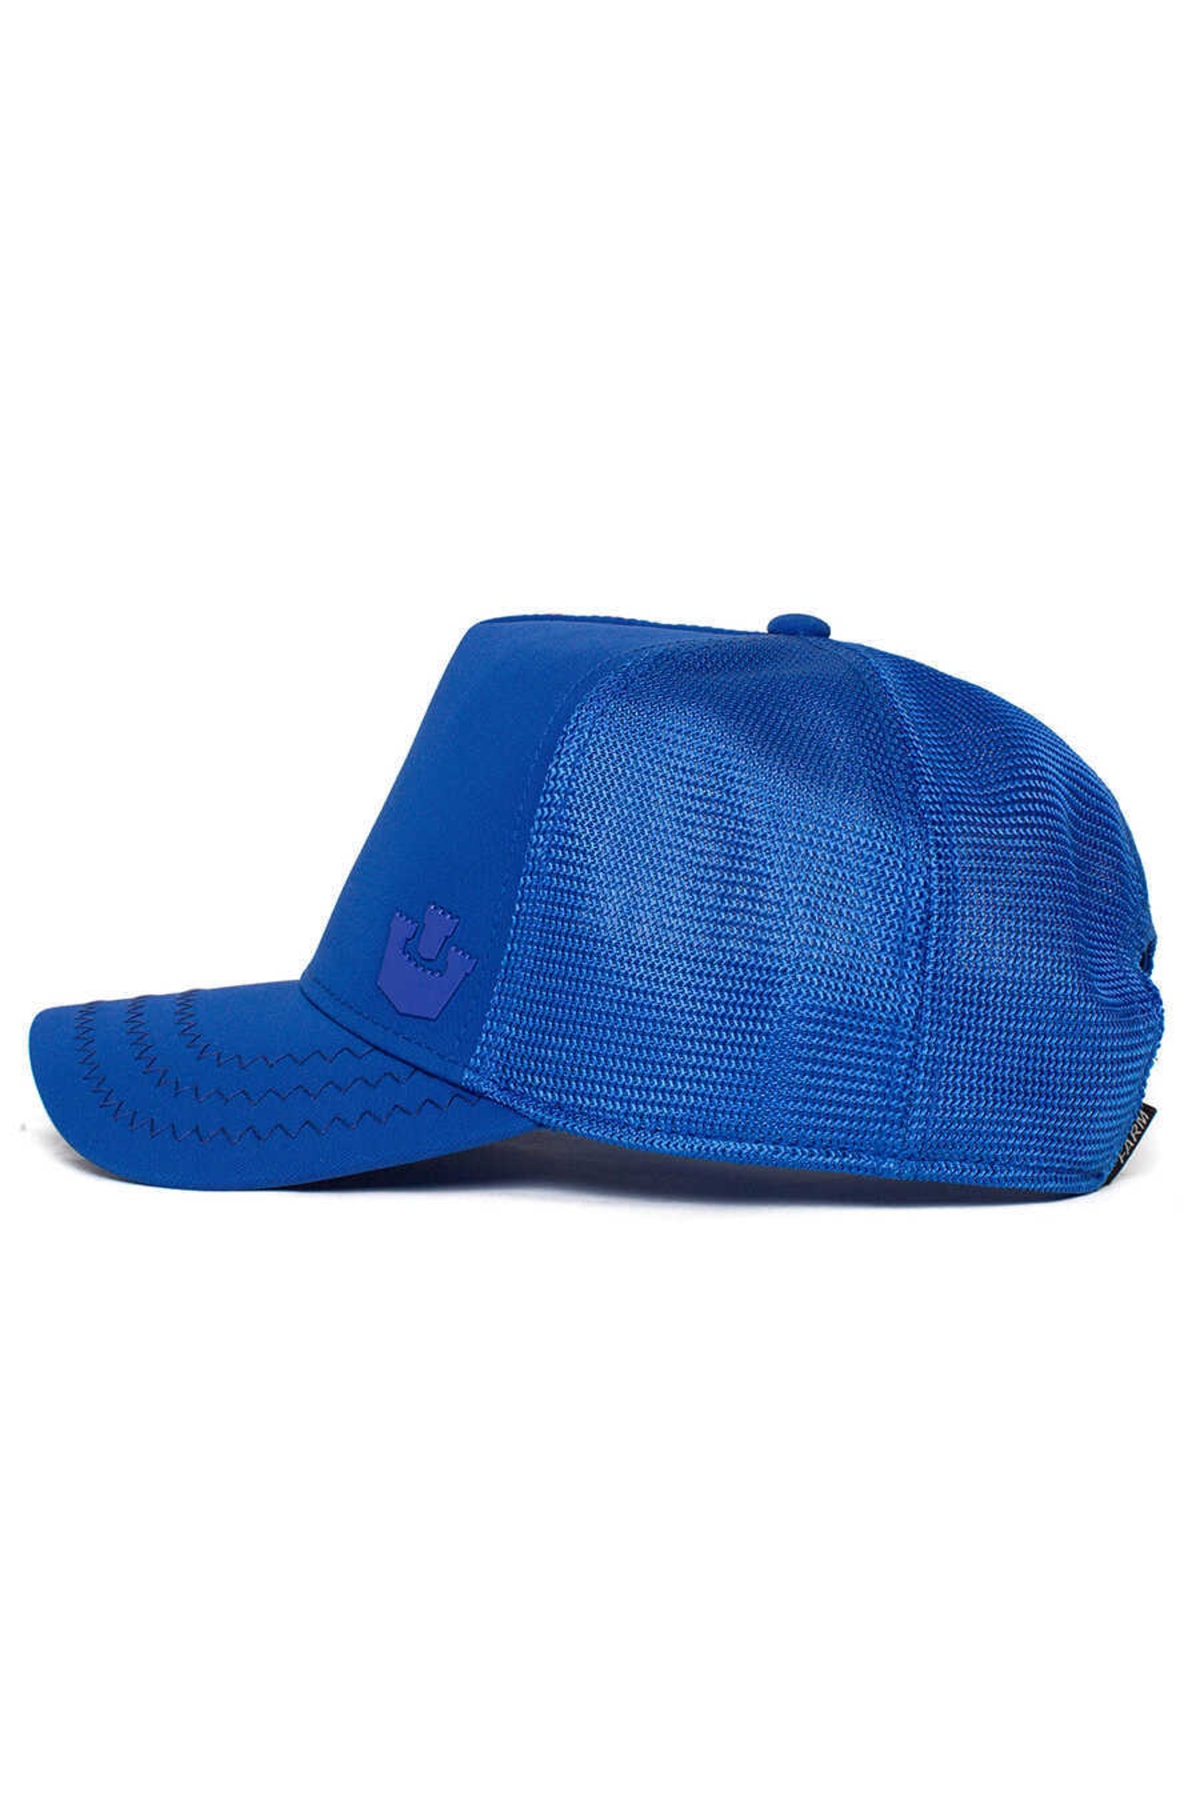 Goorin Bros Gateway Şapka 101-0784 Mavi Standart FU8099